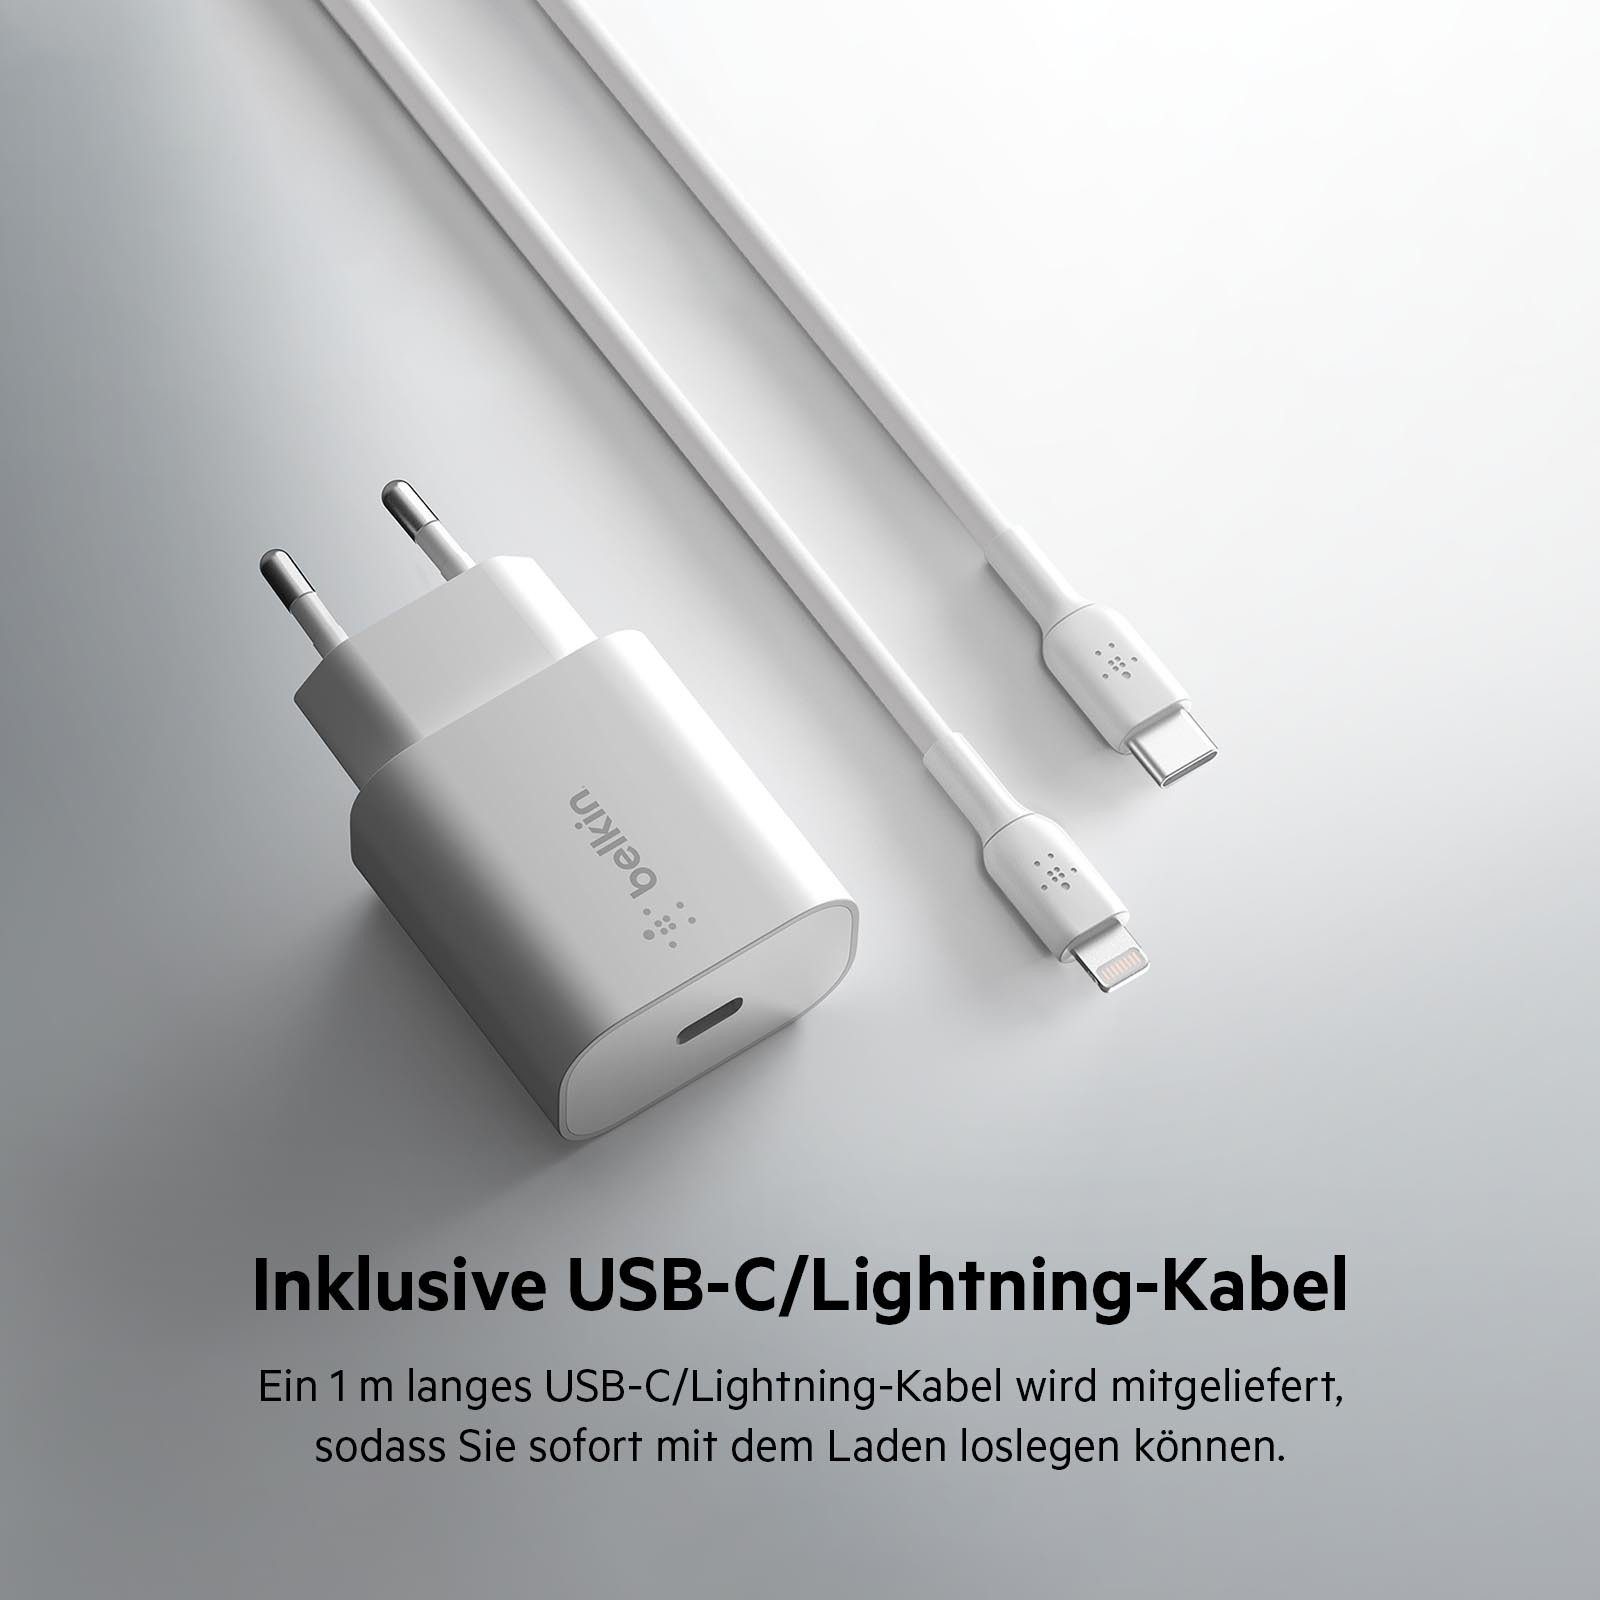 25W USB-Ladegerät Kabel Ladegerät PowerDelivery, Belkin light. 1m USB-C